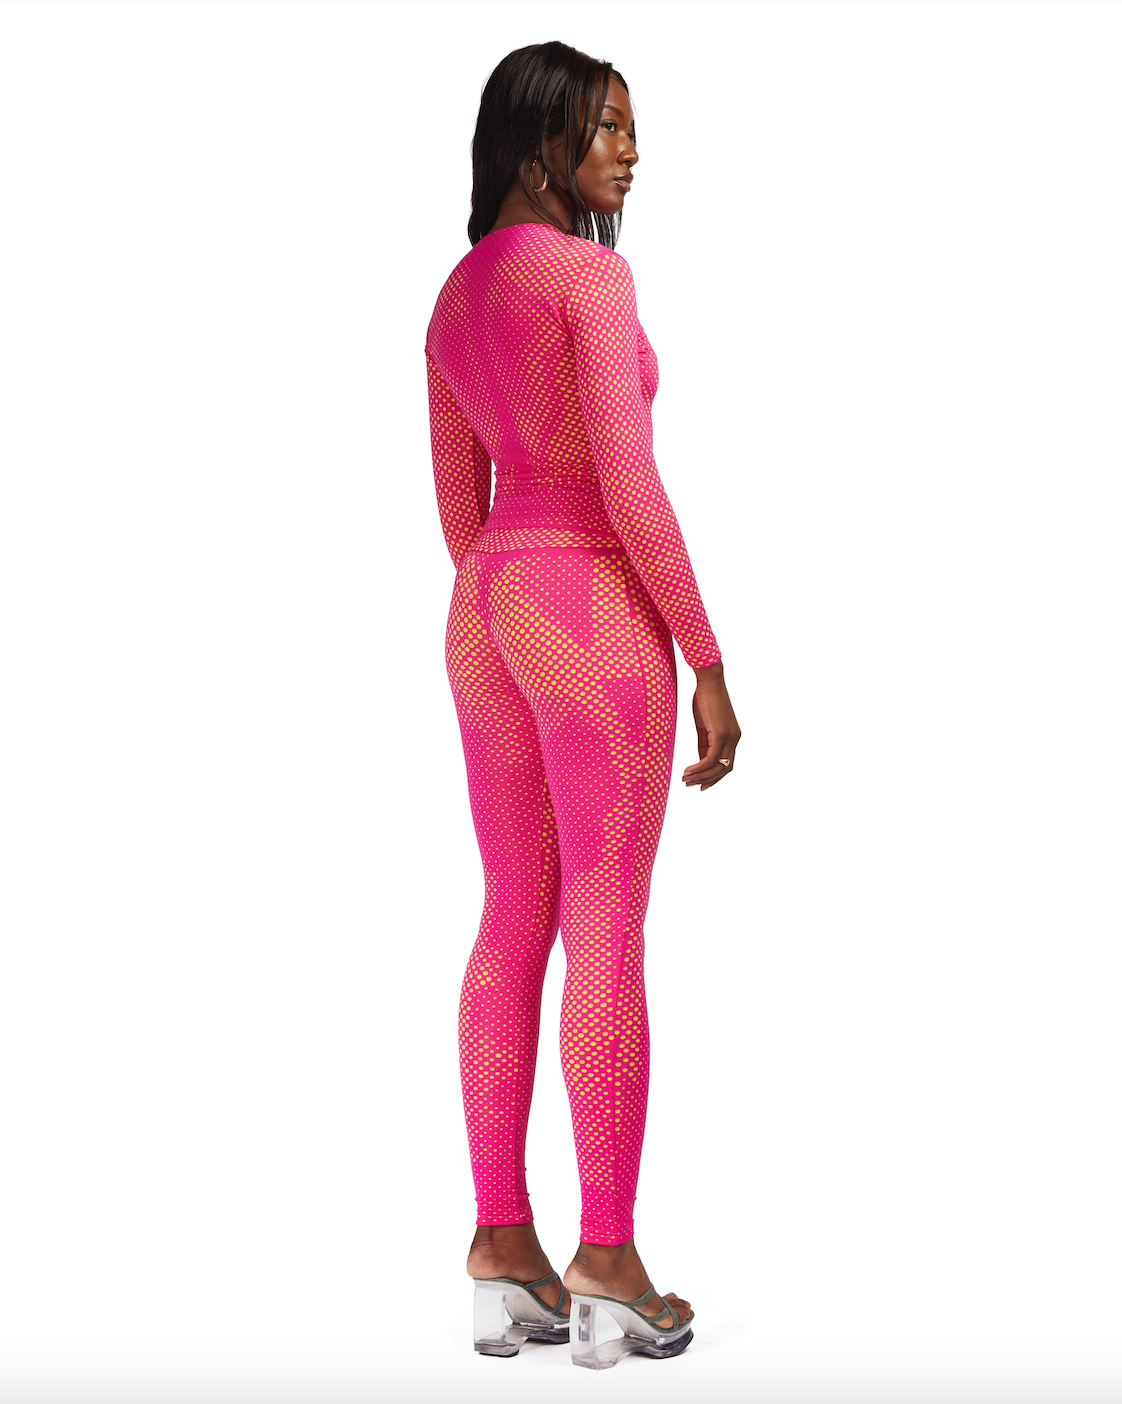 Laser-Cut body enhancing double layer leggings